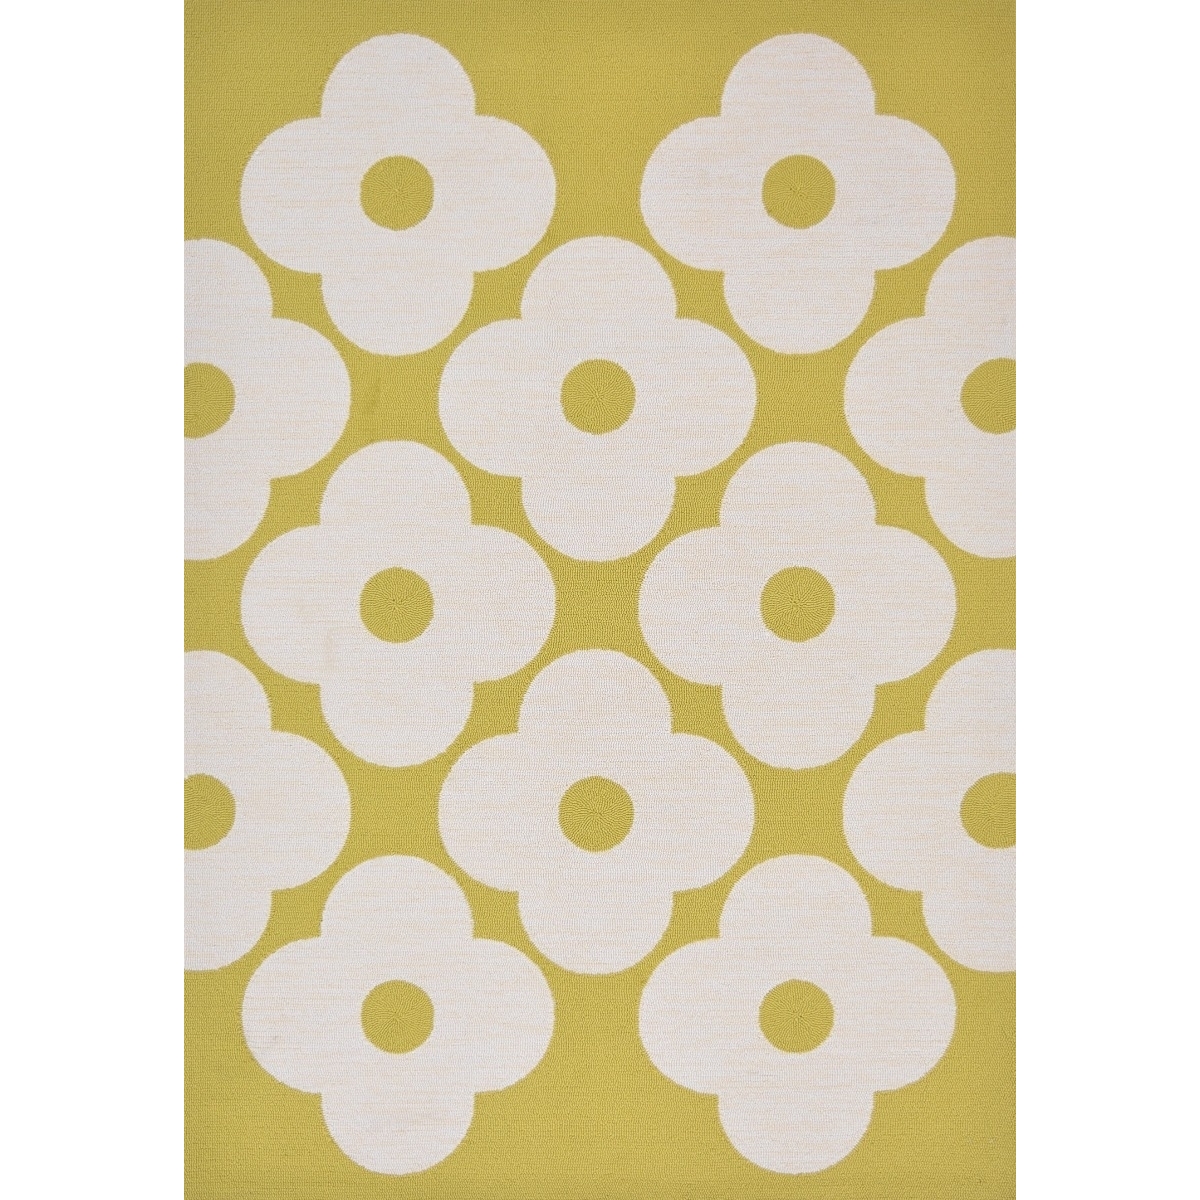 Orla Kiely Spot Flower Yellow 460806